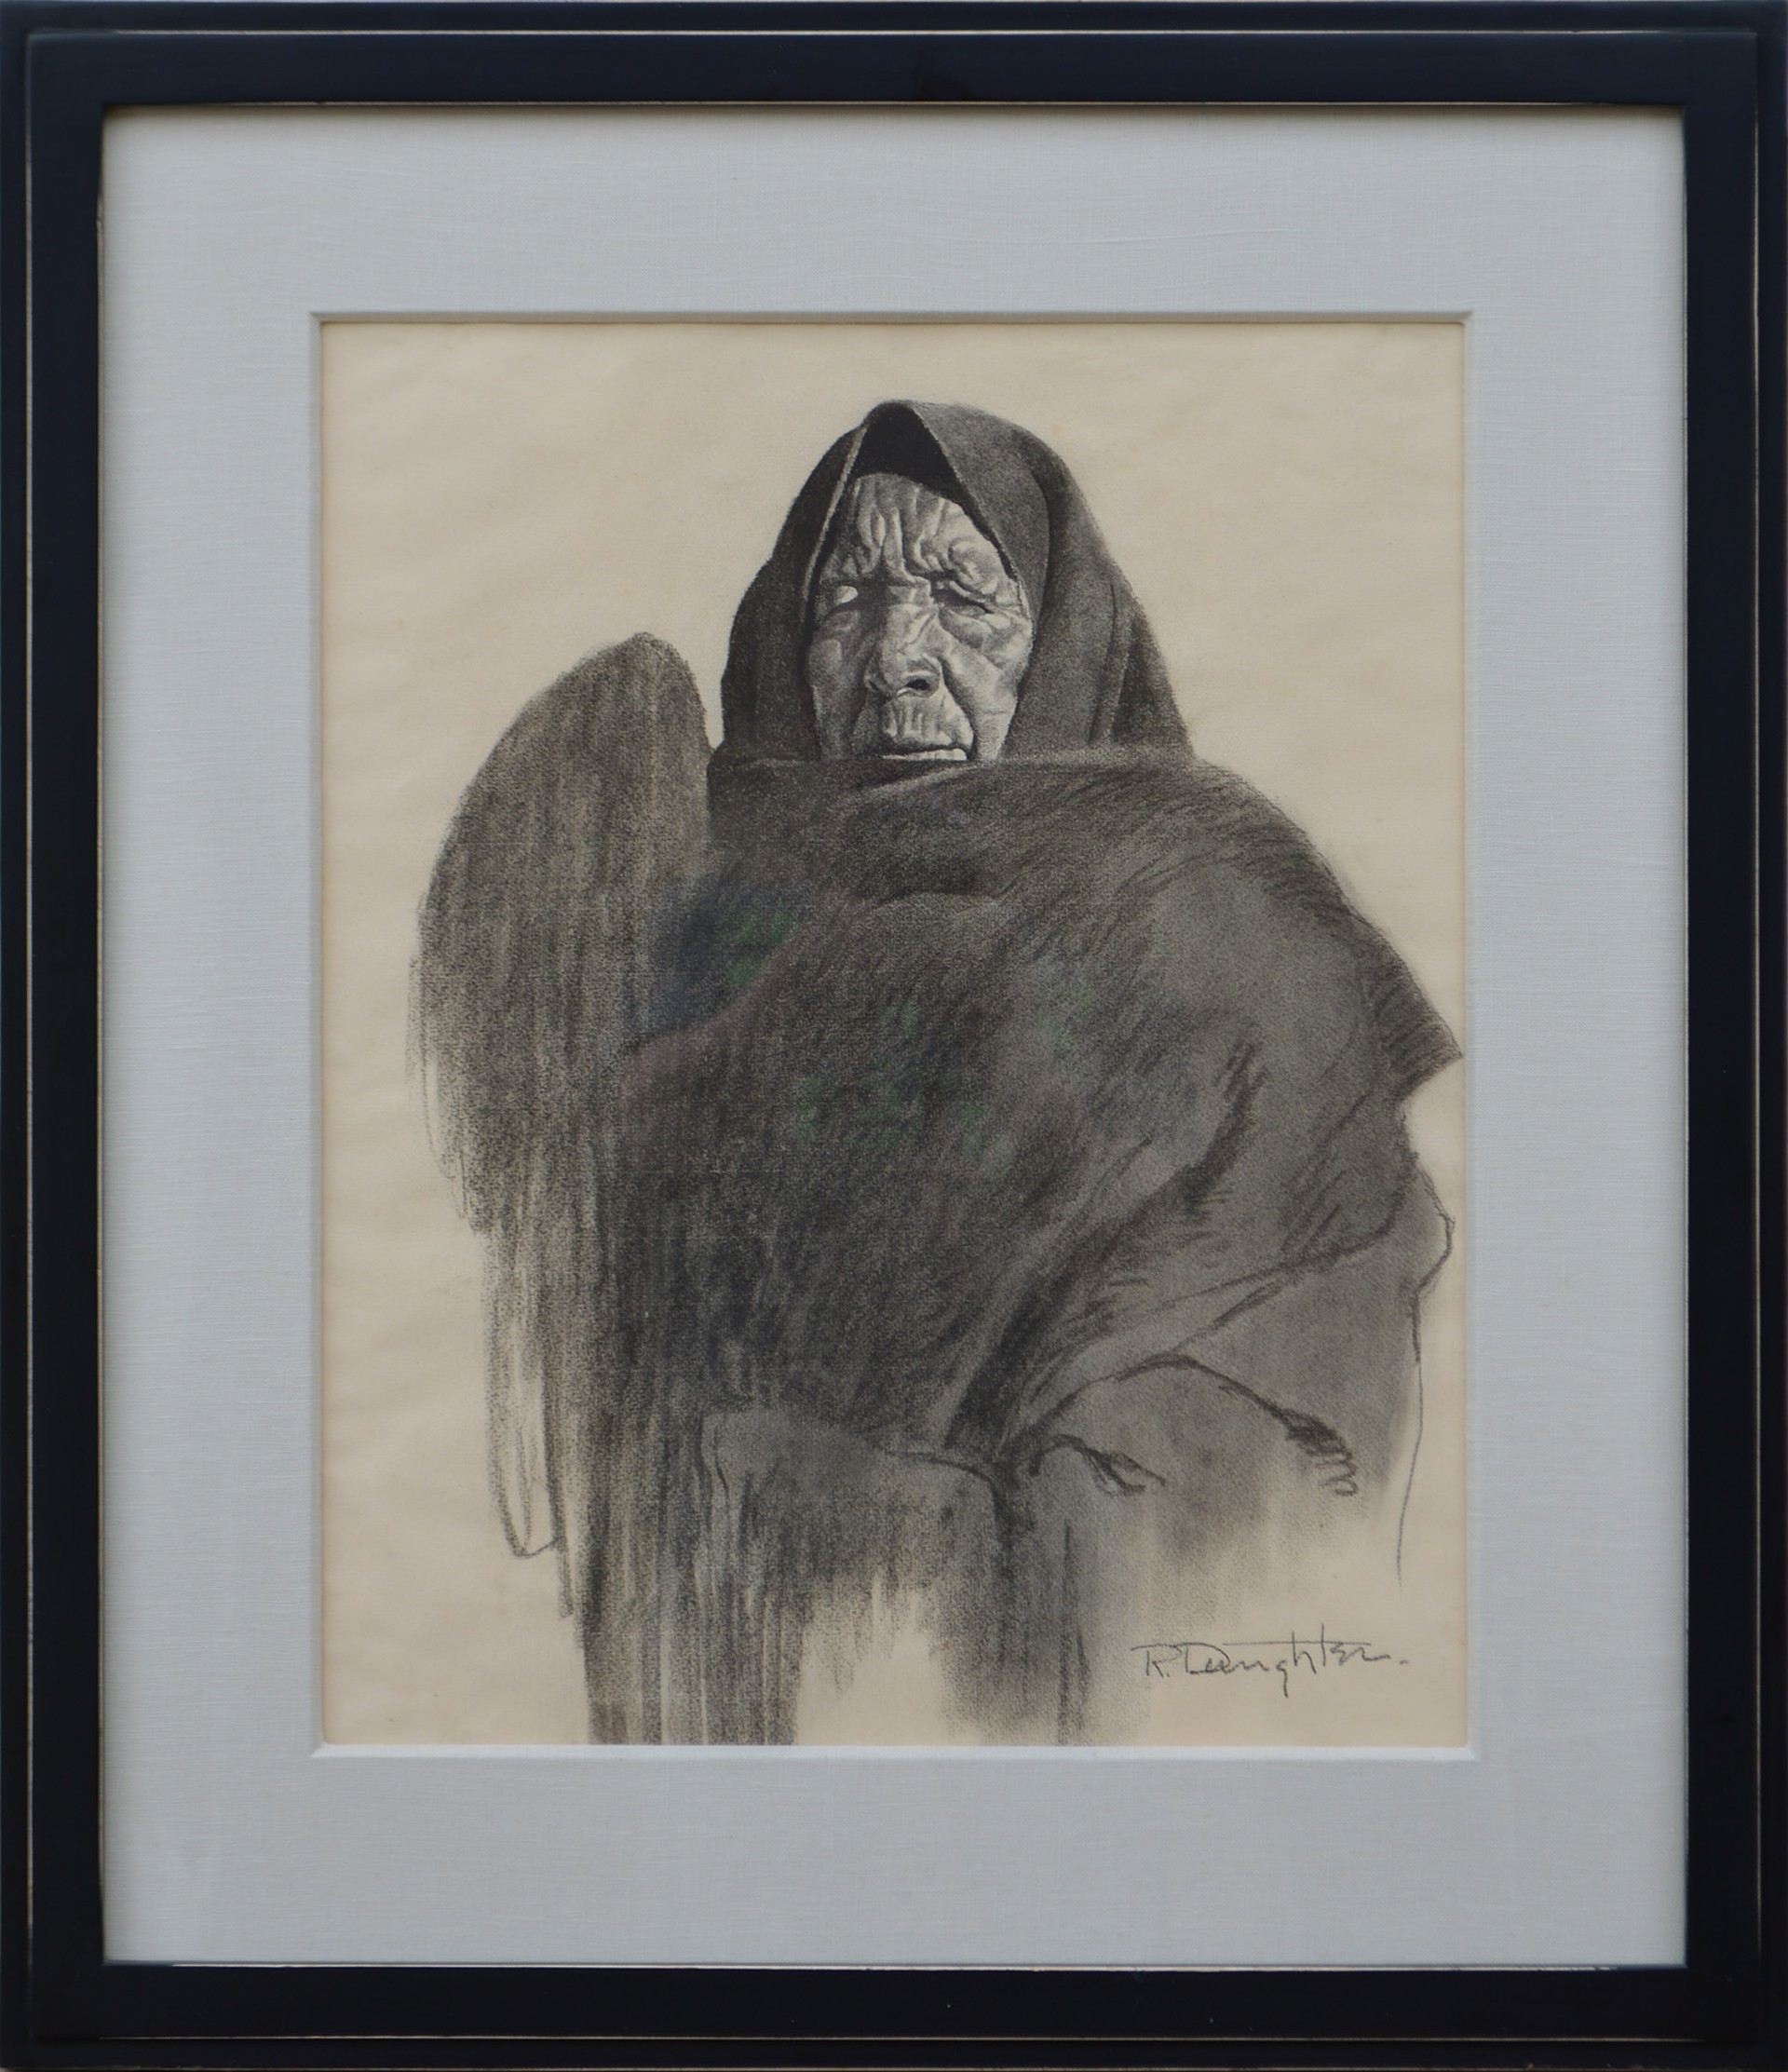 Taos Indian by Robert Daughters (1929-2013)